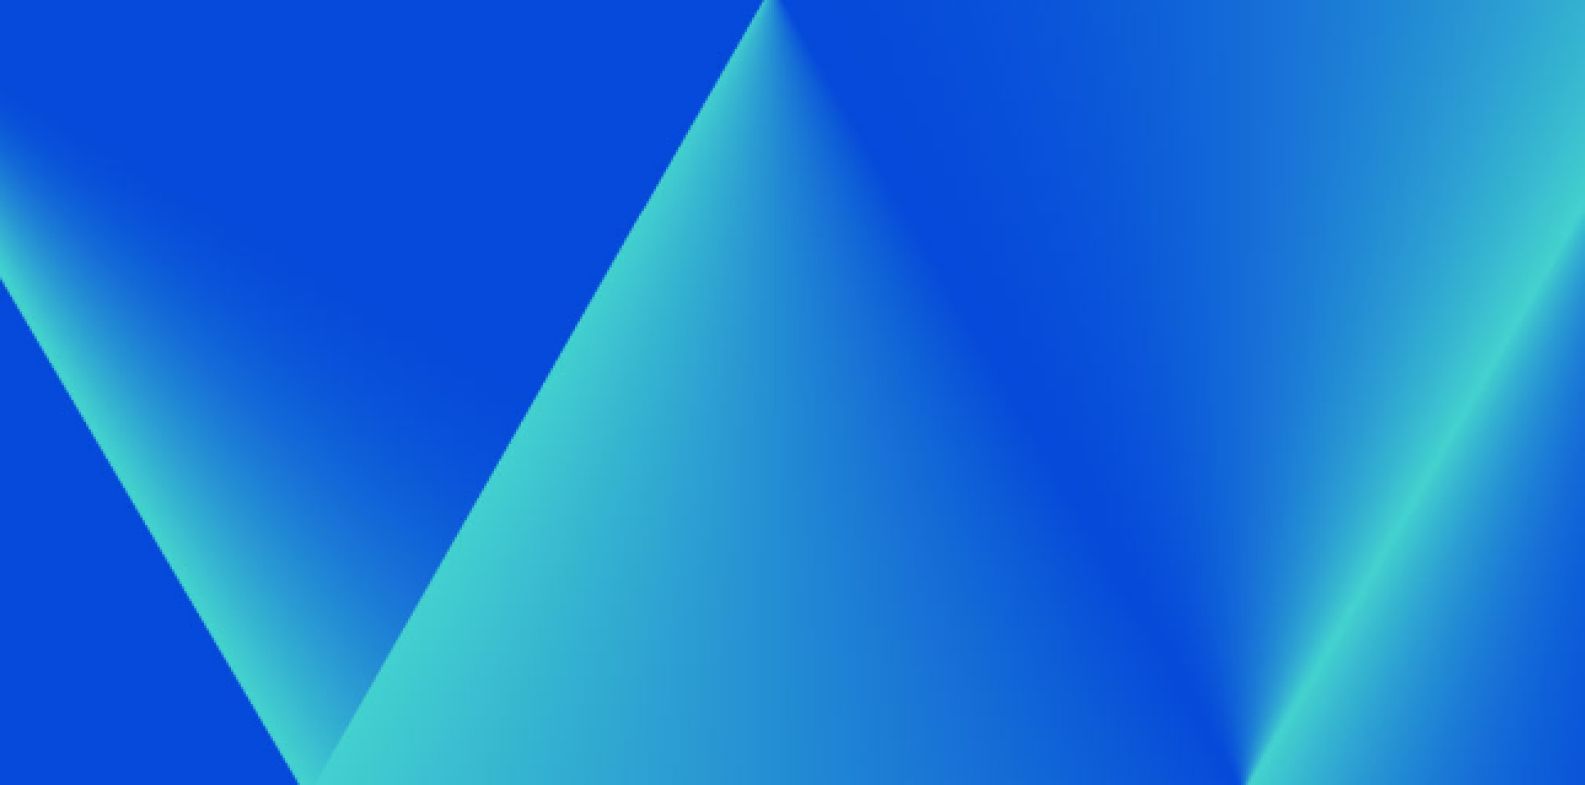 Fondo azul con triángulos verdes azules